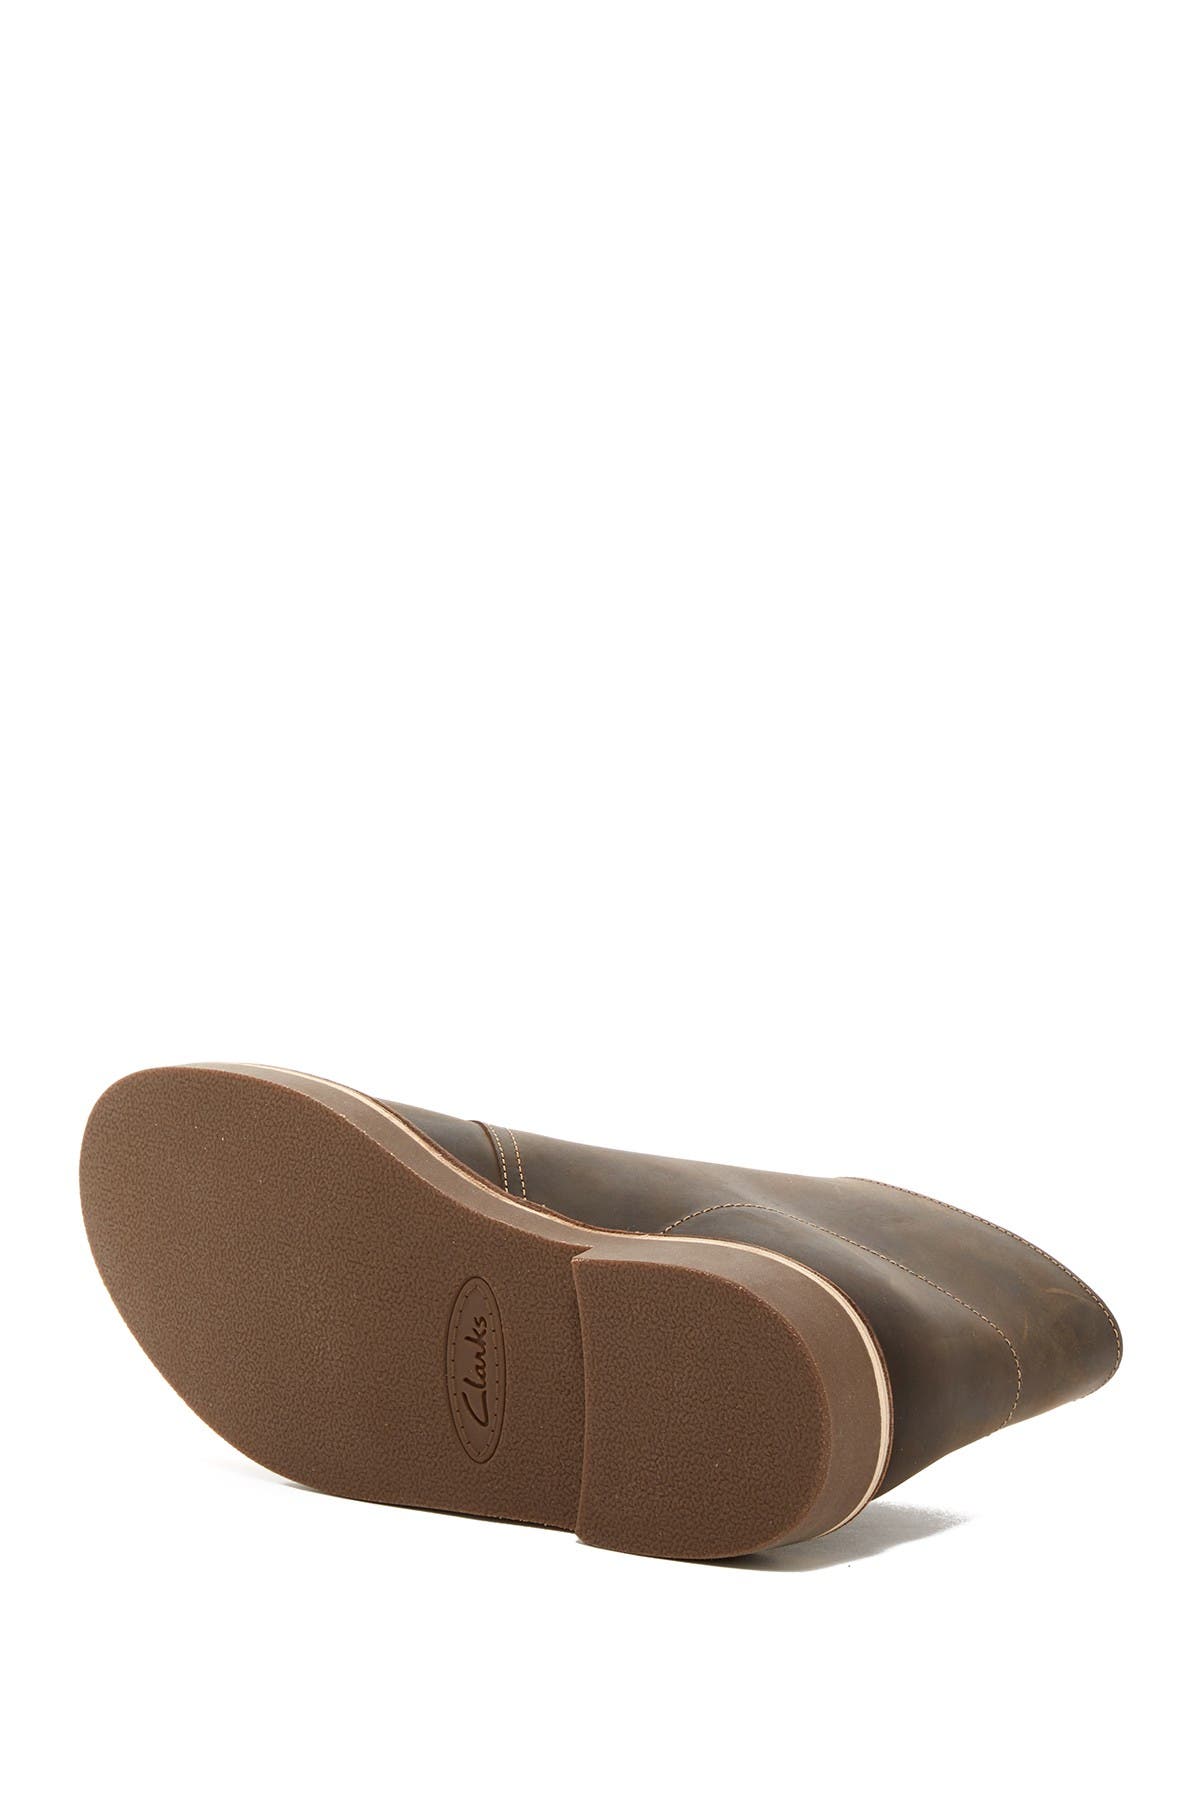 Clarks | Bushacre Leather Chukka Boot 